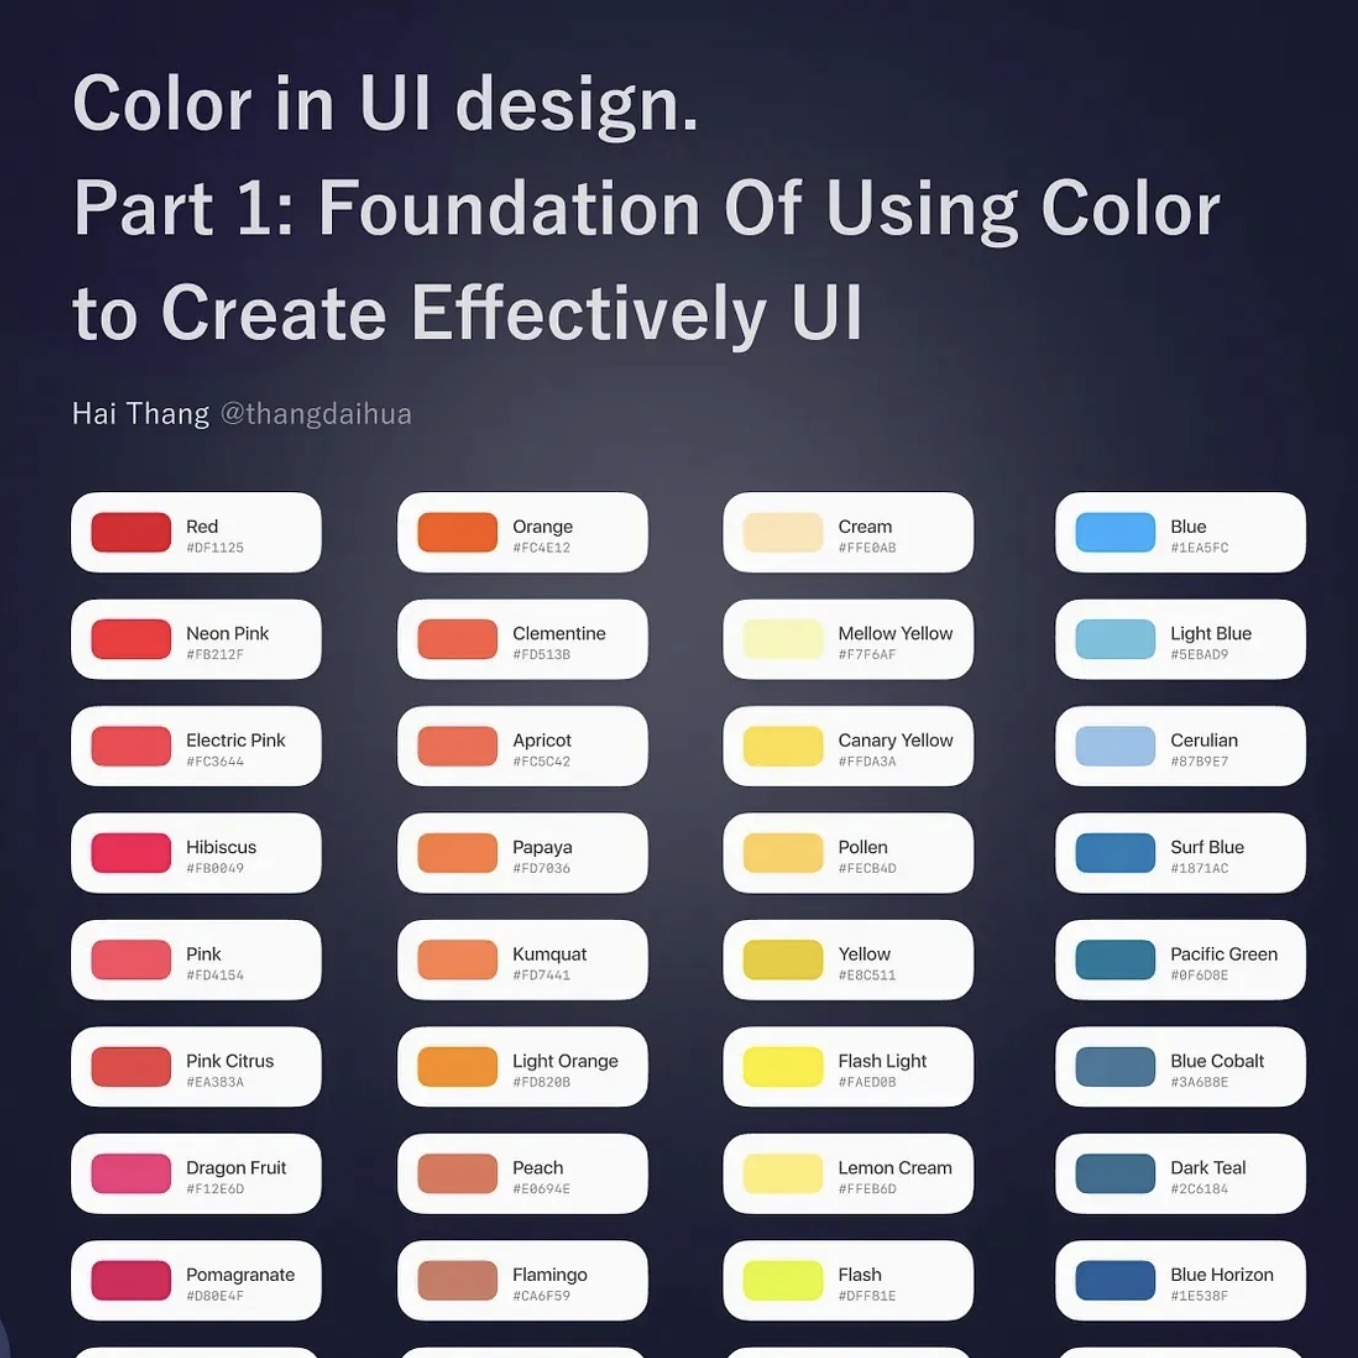 UI 设计中的色彩 - 第 1 部分：使用色彩有效创建 UI 的基础